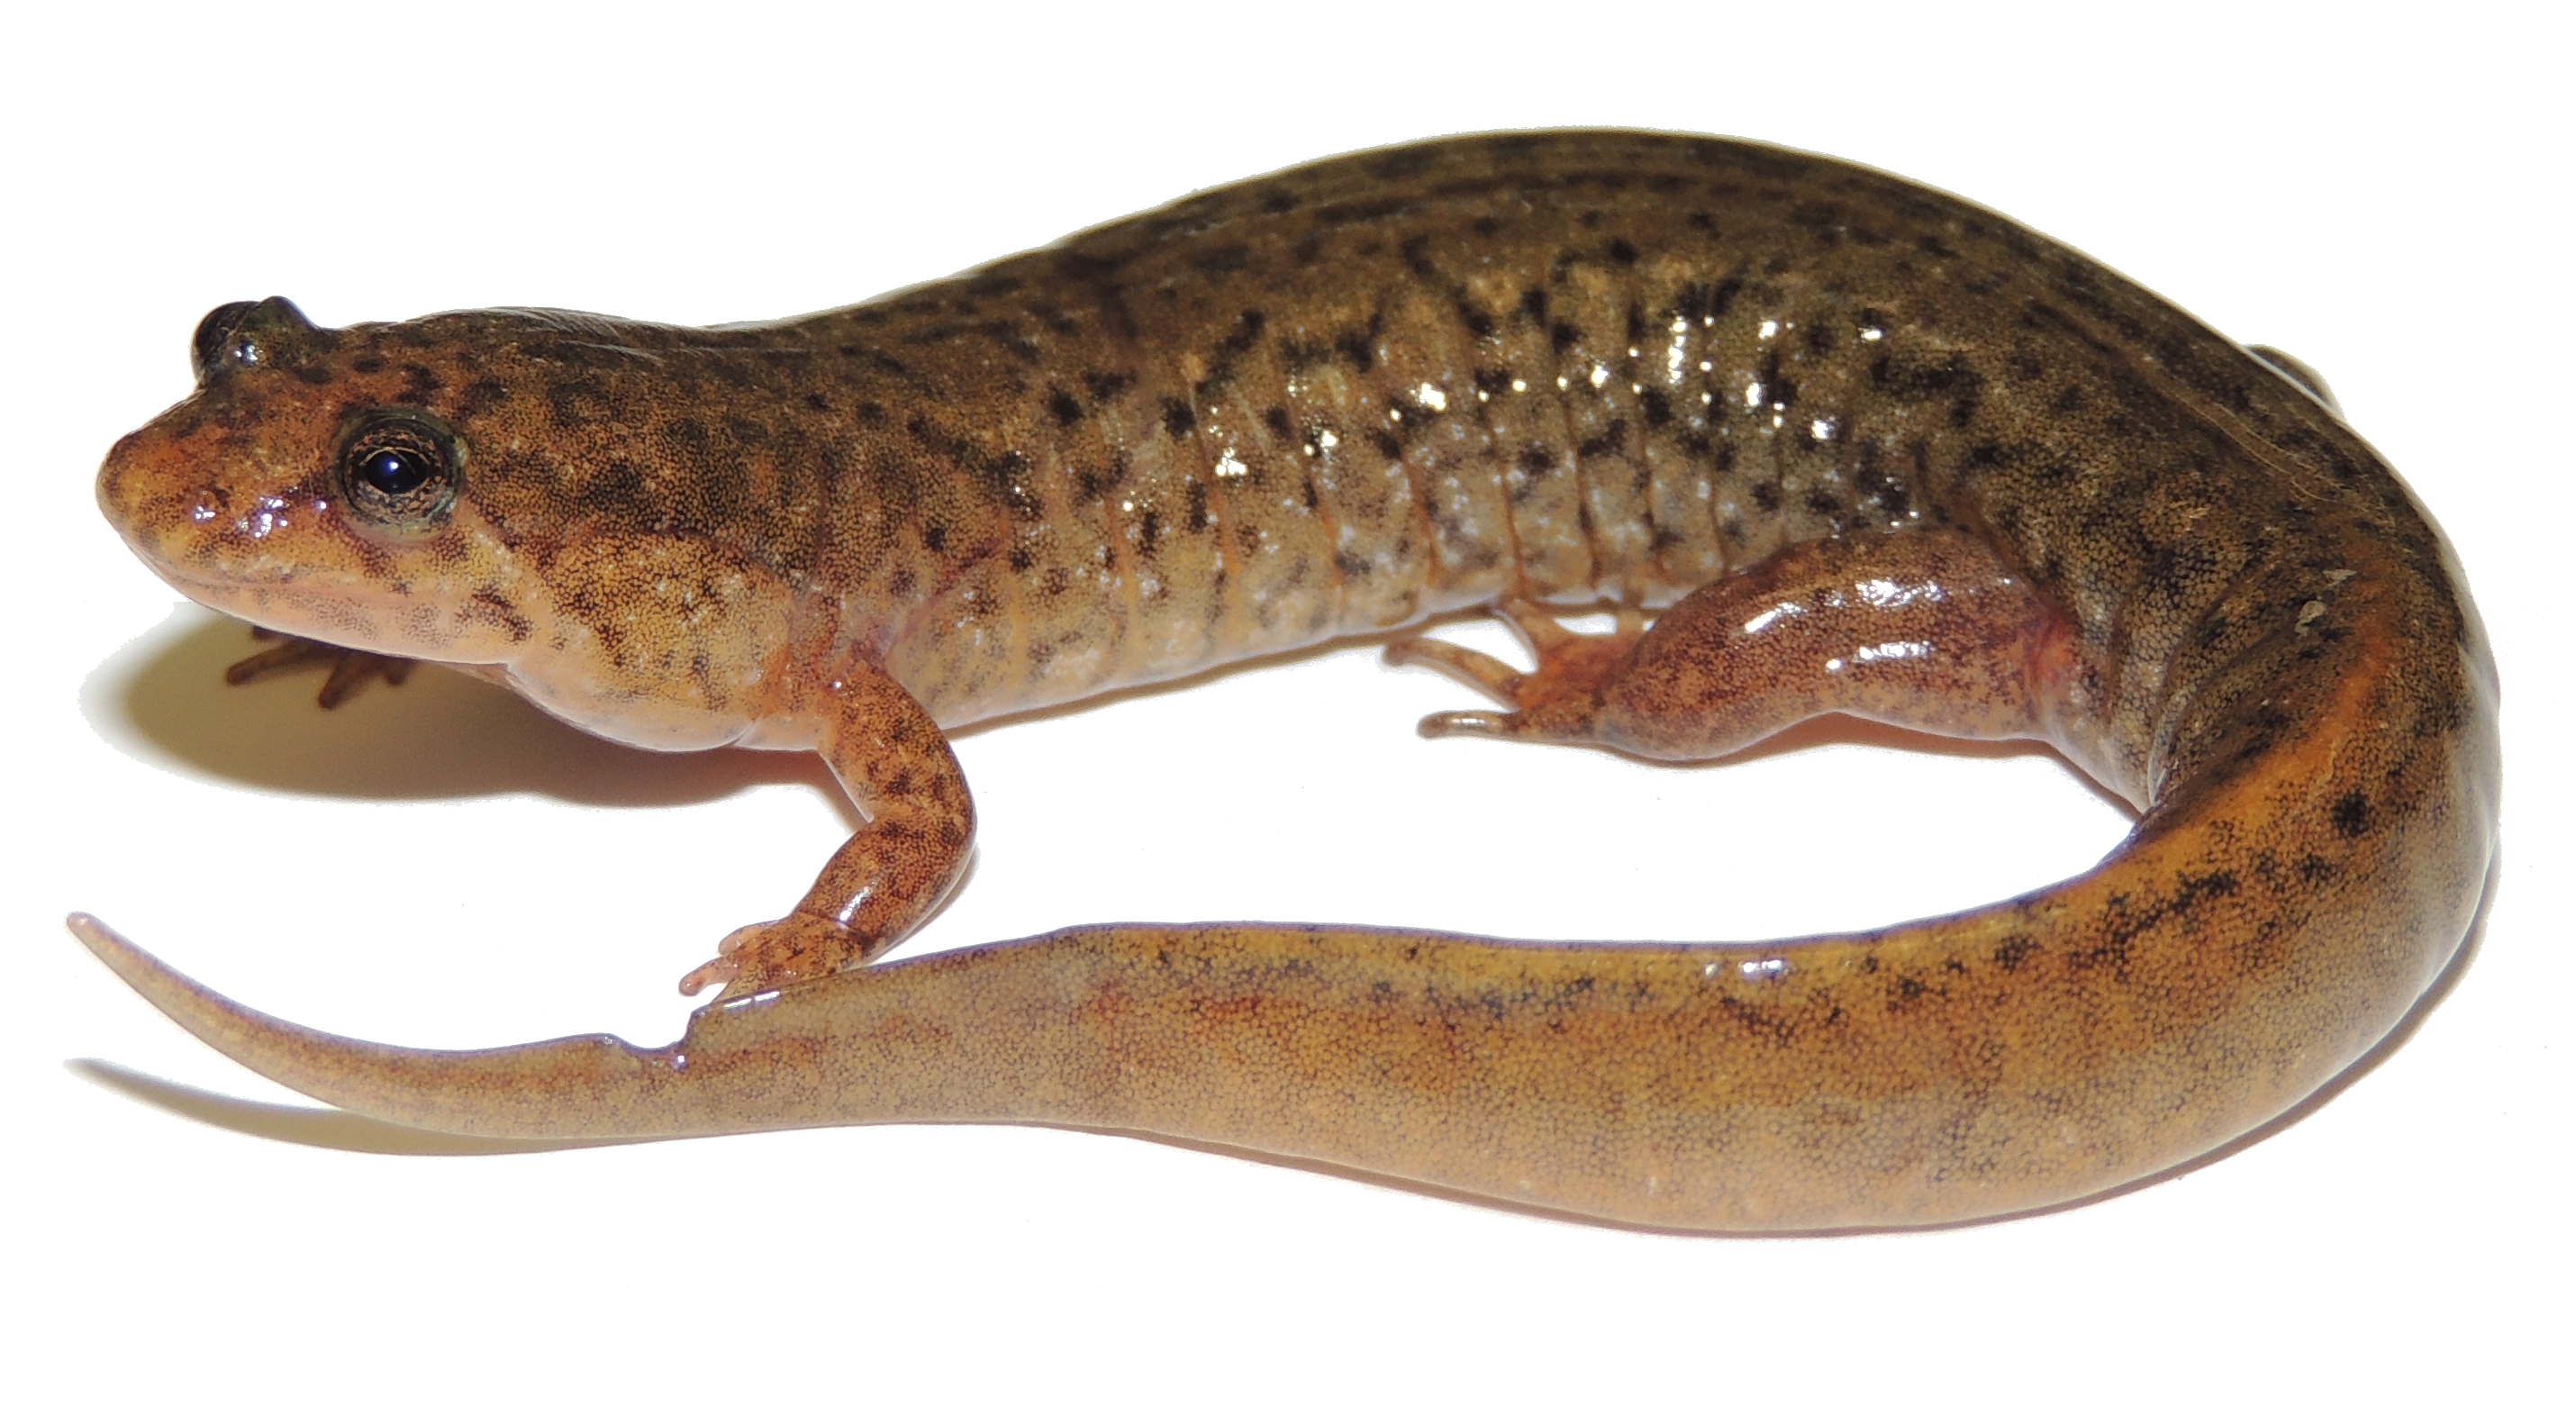 Desmognathus fuscus (Northern dusky salamander)